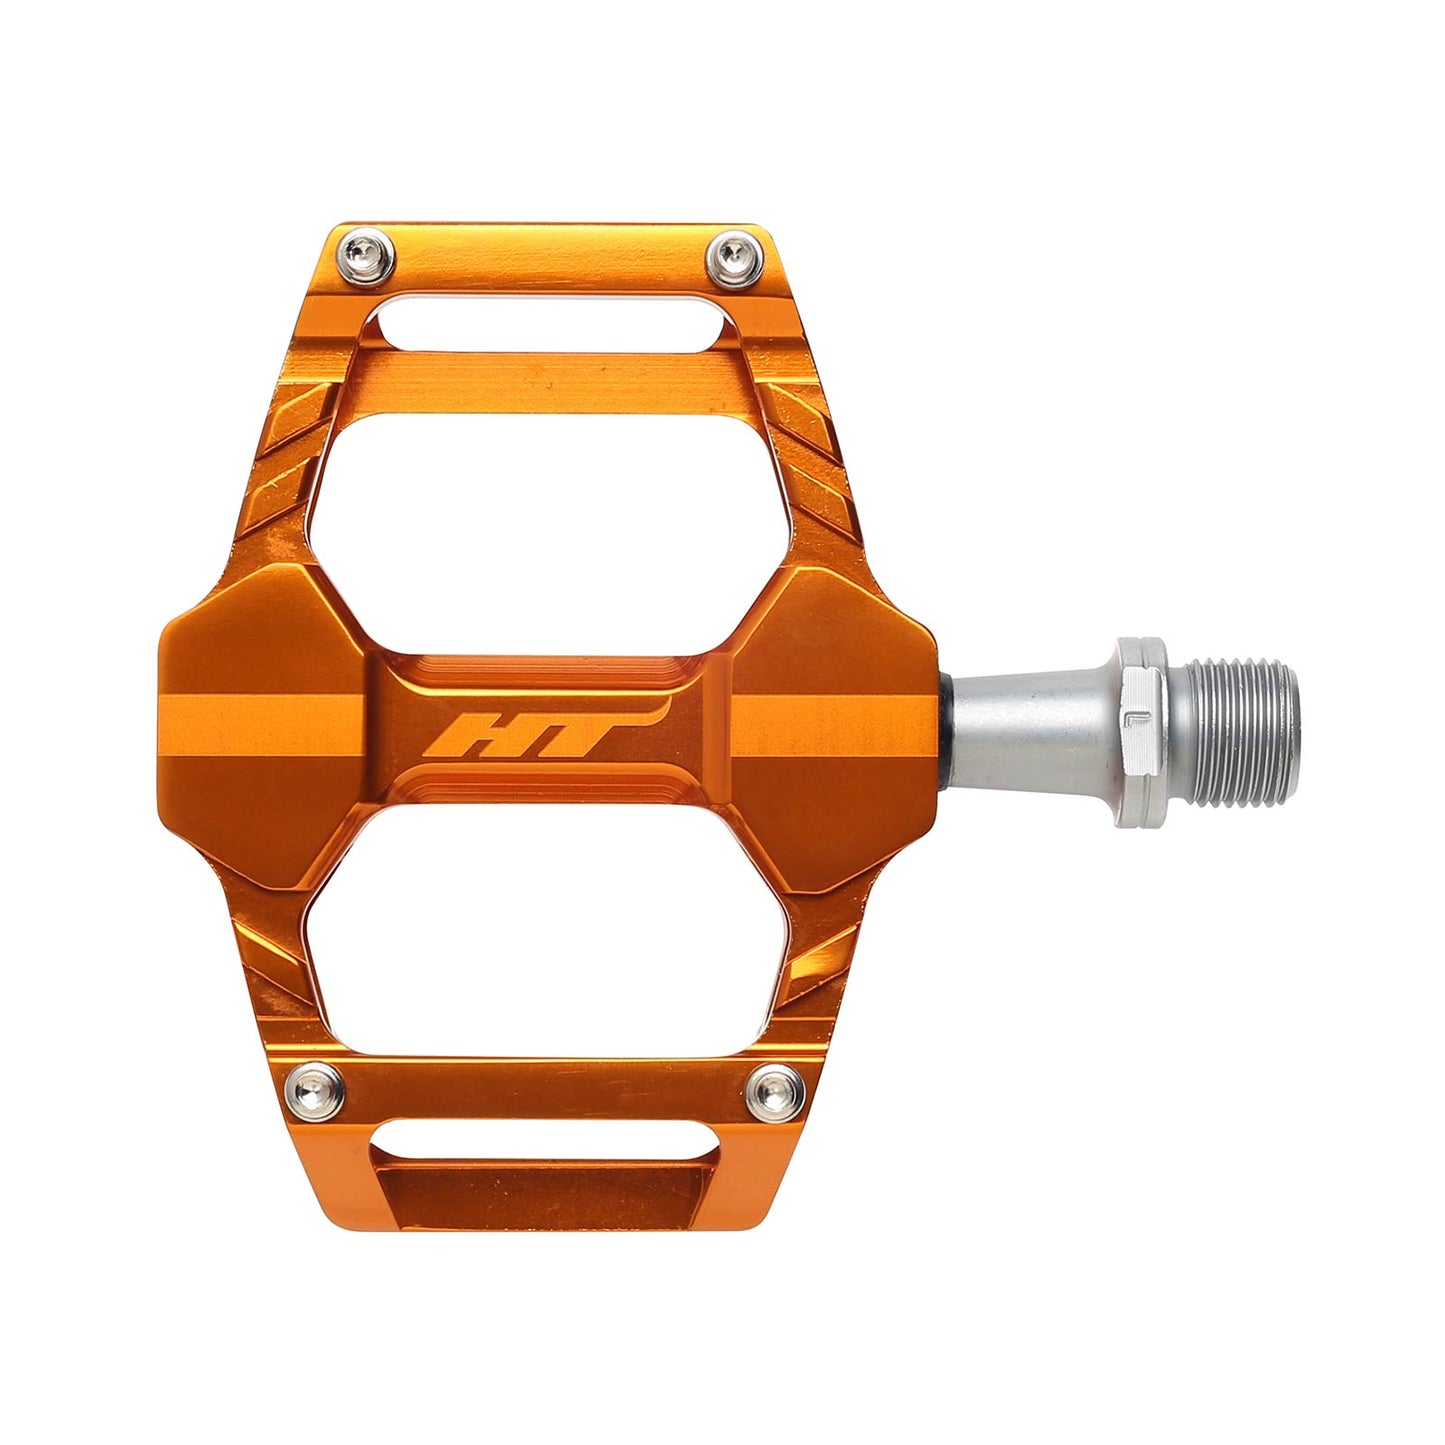 Ht AR06 Pedals Alloy / CNC CRMO - Orange